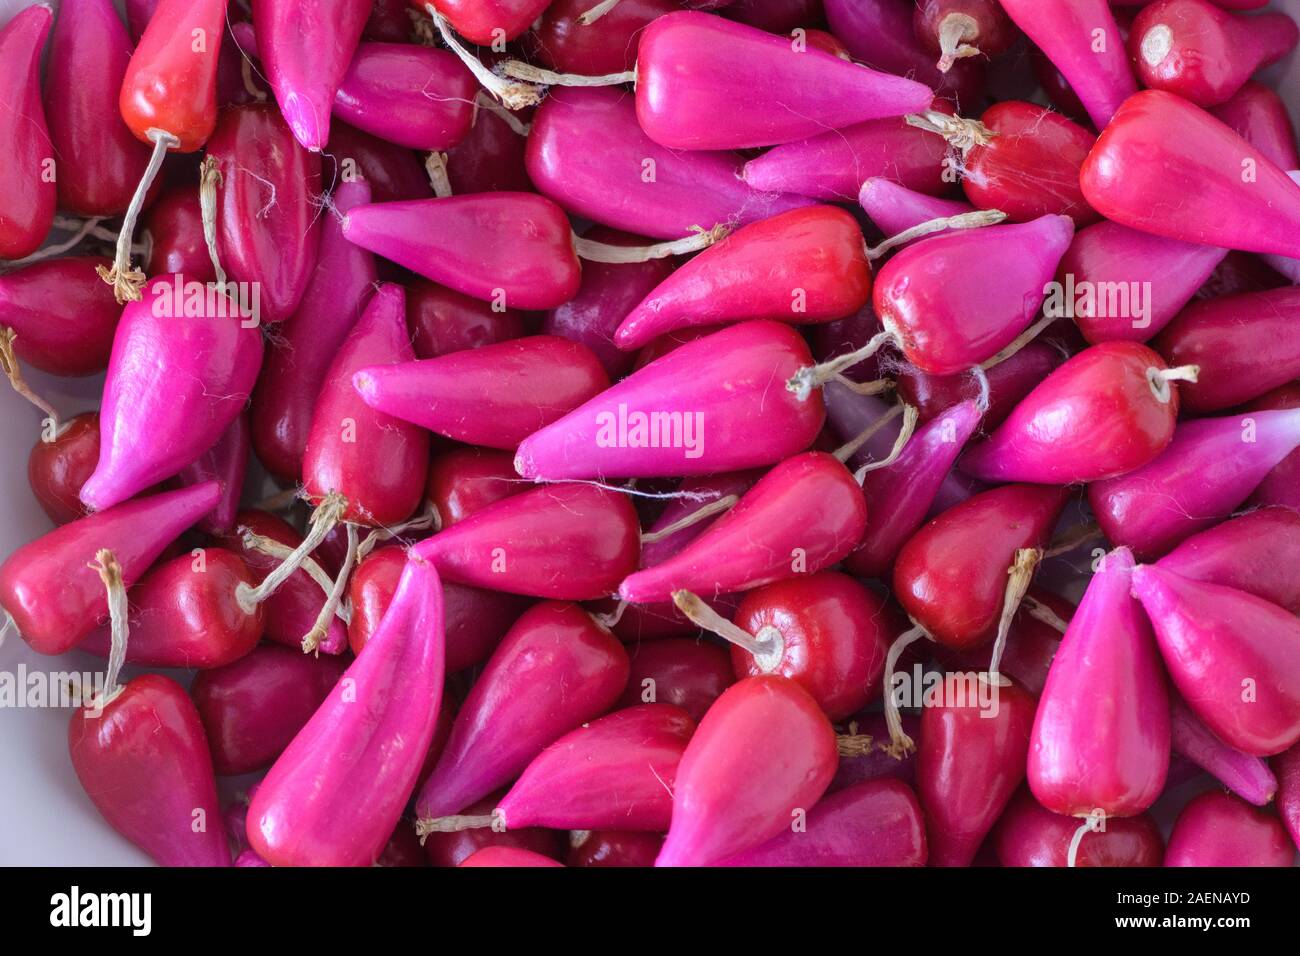 Pitiguey pink fruits assortment marketplace. Group Stock Photo